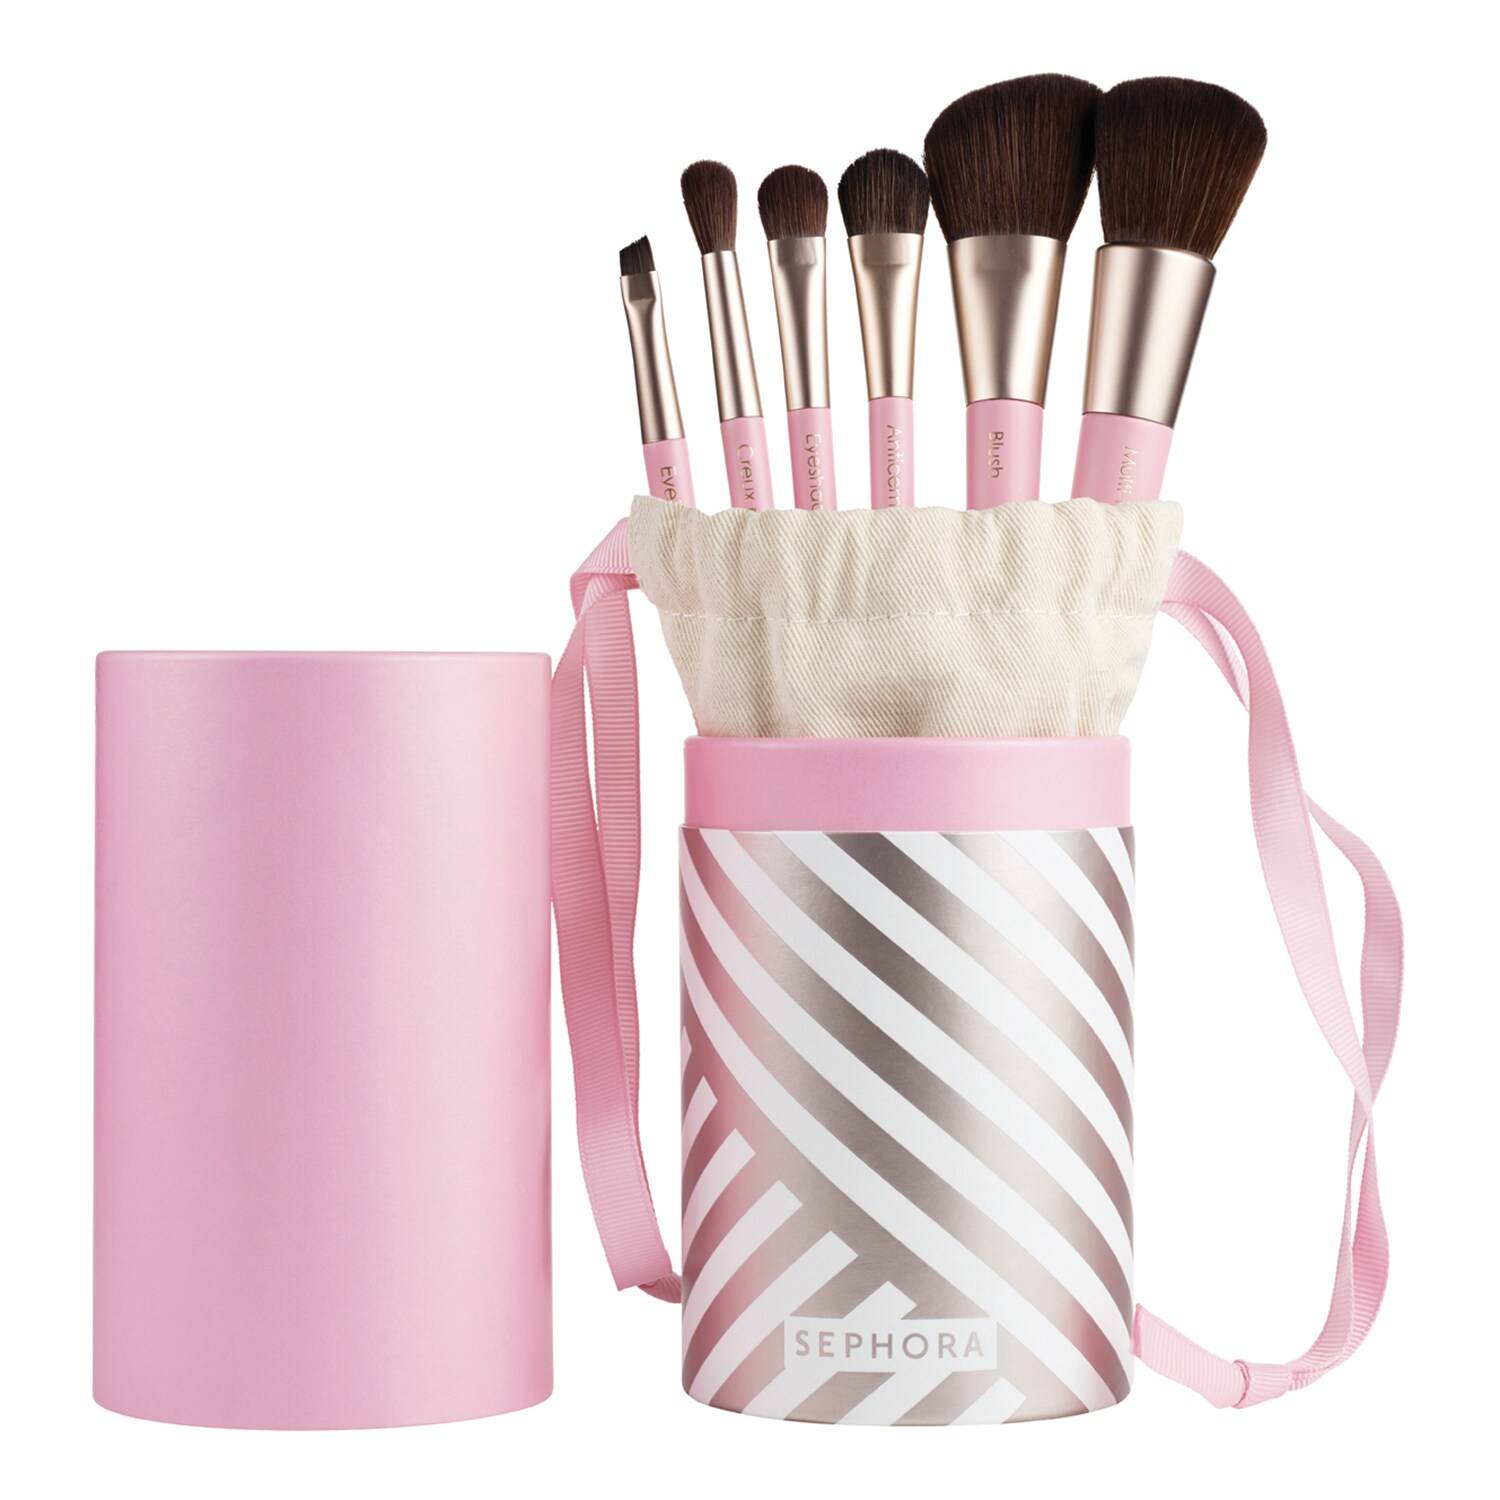 Sephora Collection Starter Make-Up Brush Set 6 Pieces